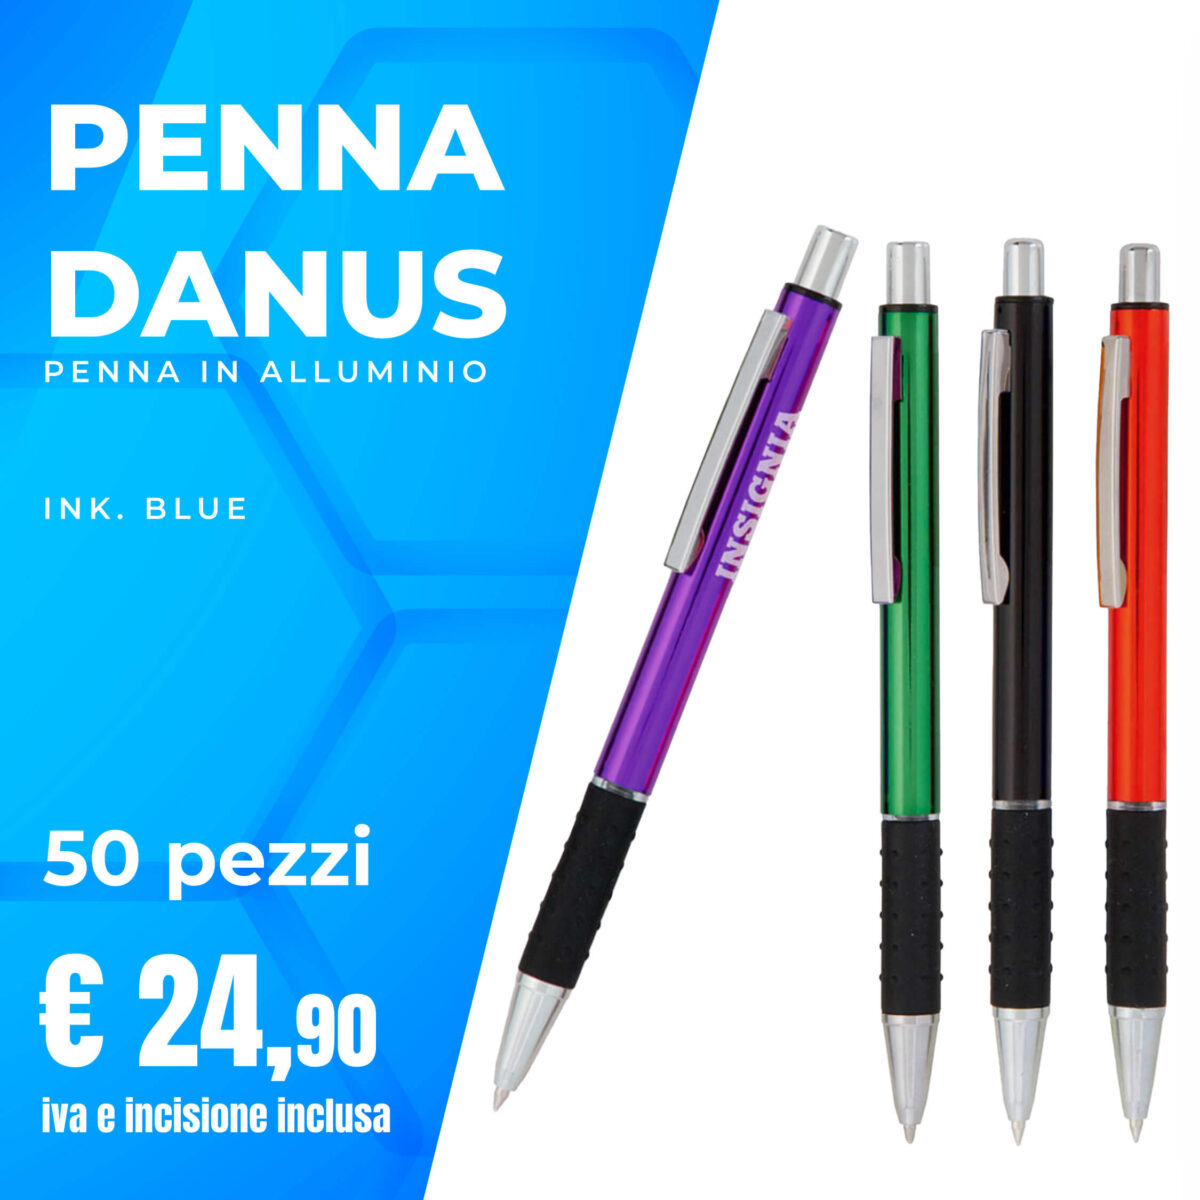 Penna Danus kit 50 pezzi